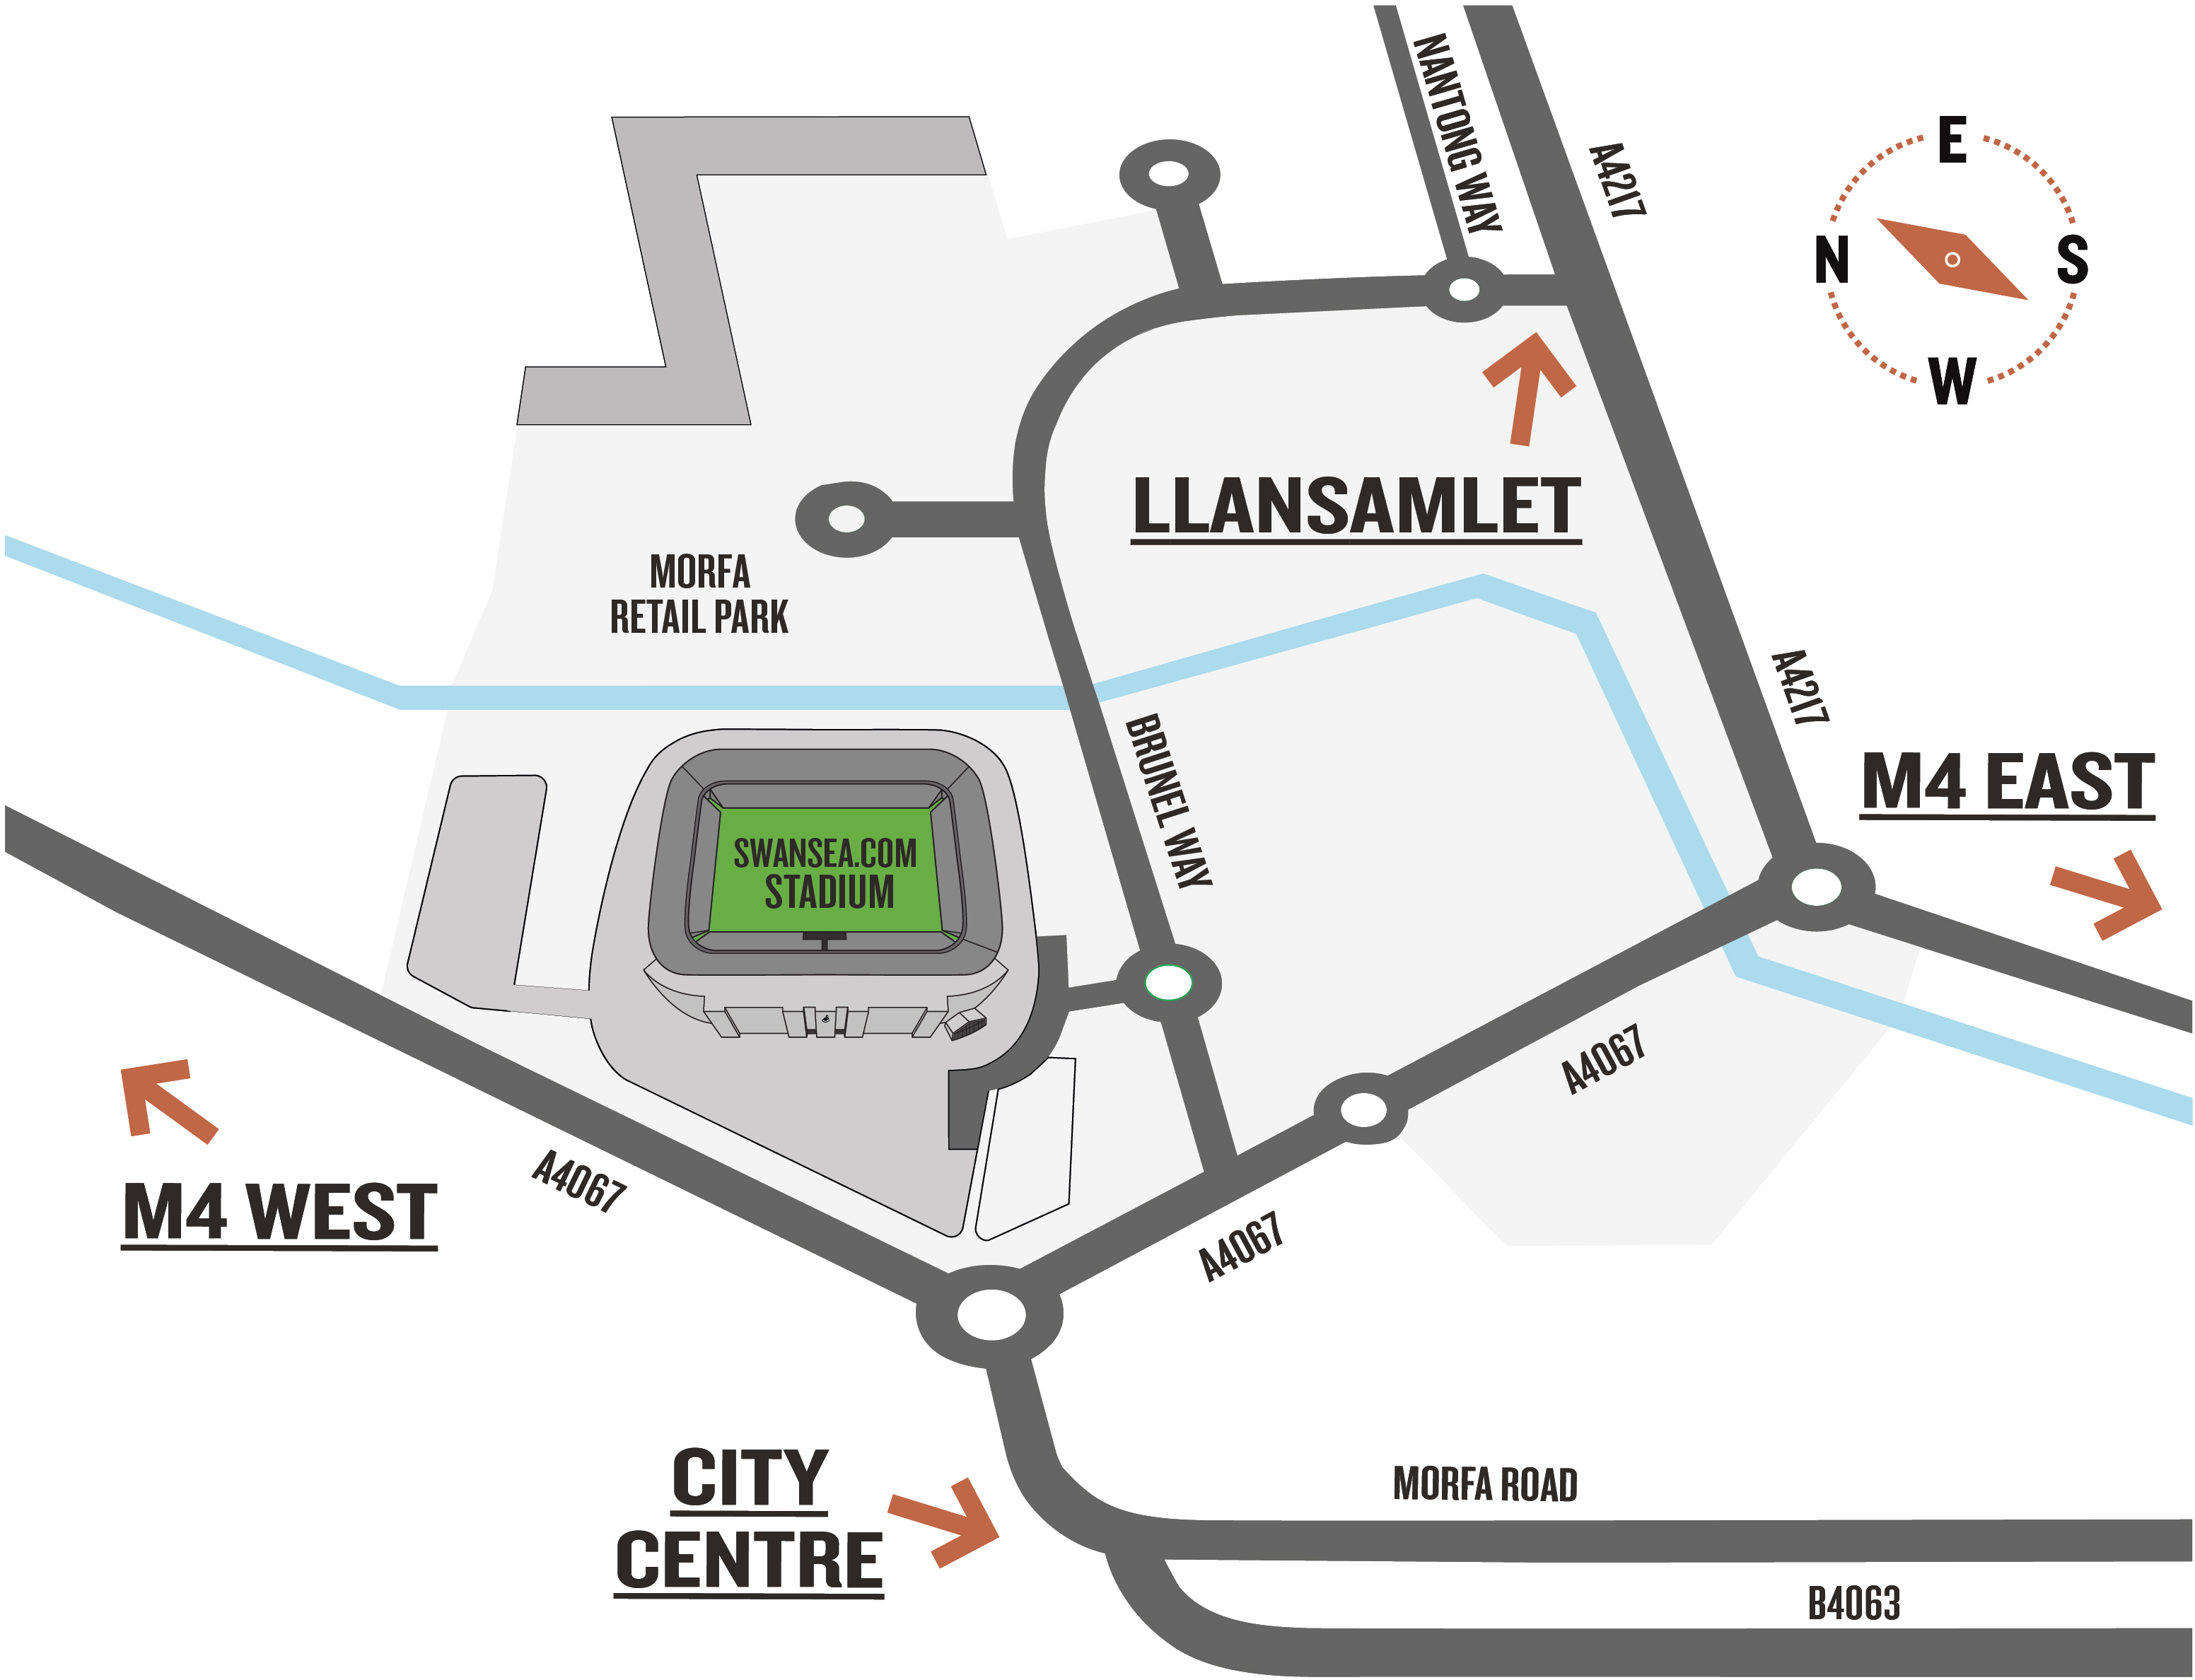 A map of the roads around the Swansea.com stadium